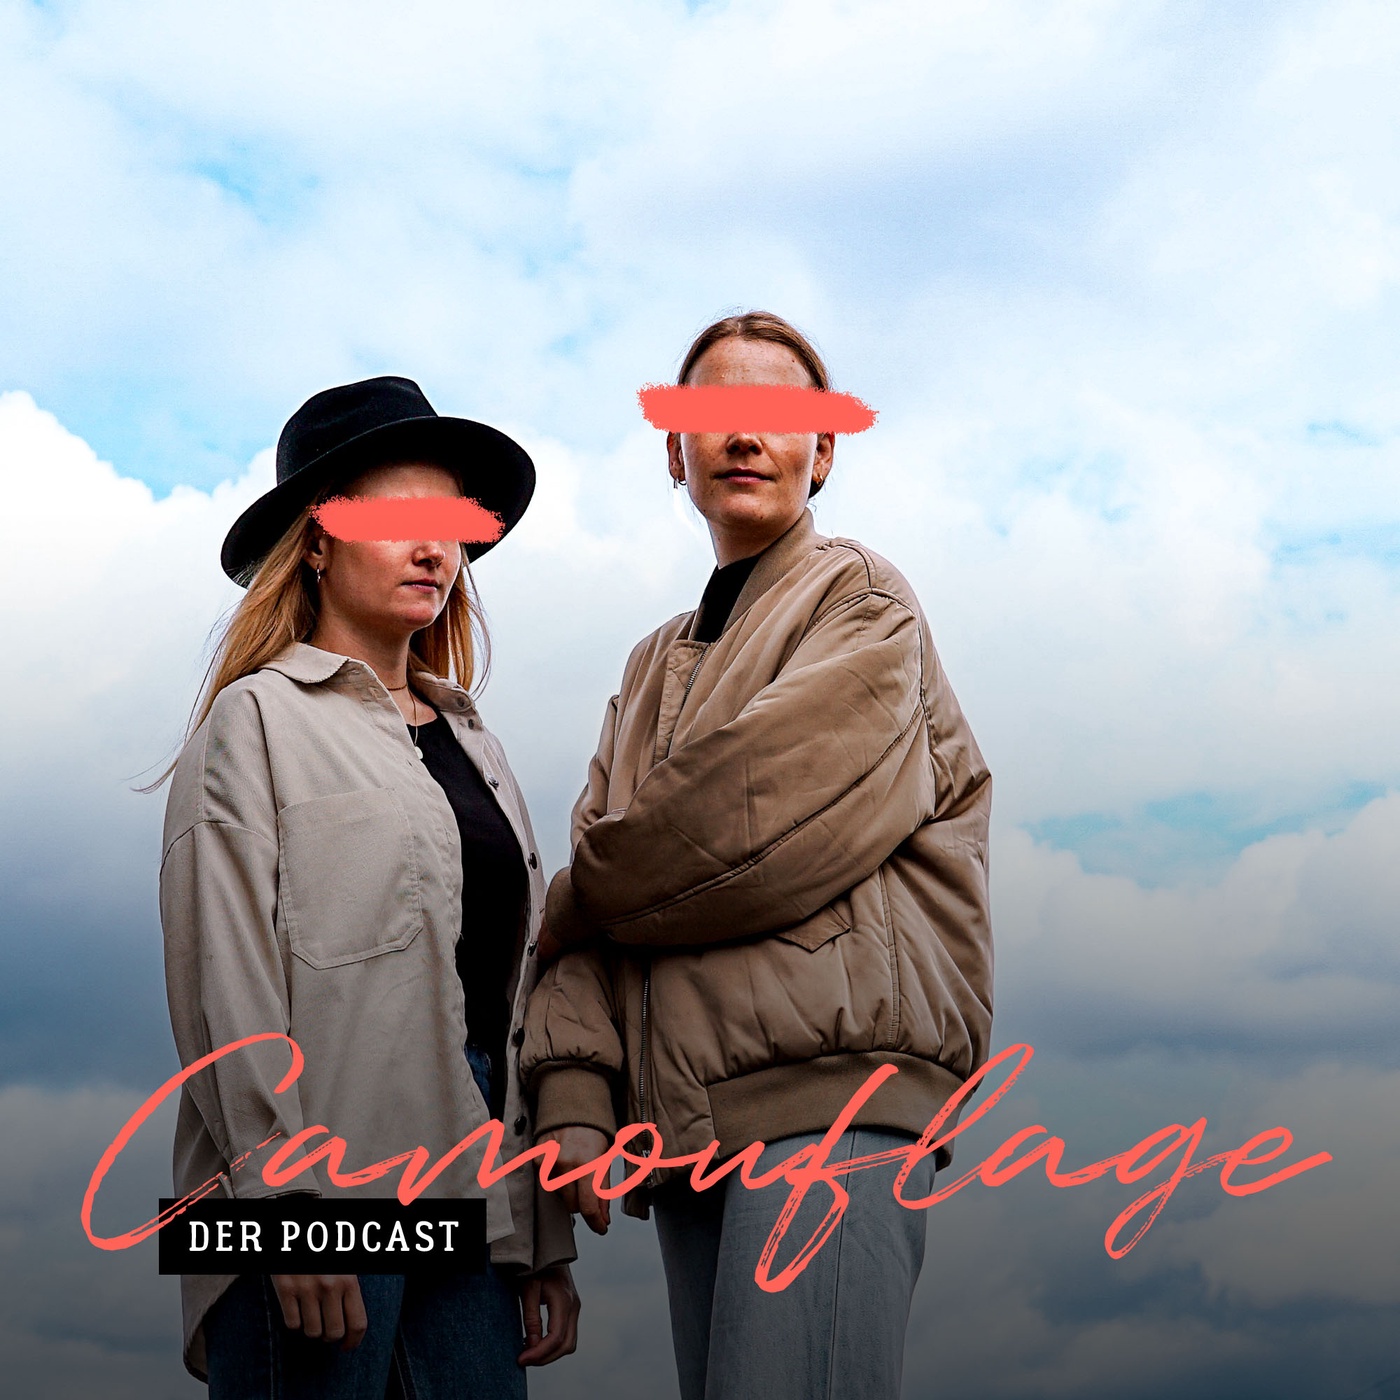 CAMOUFLAGE - Der Podcast